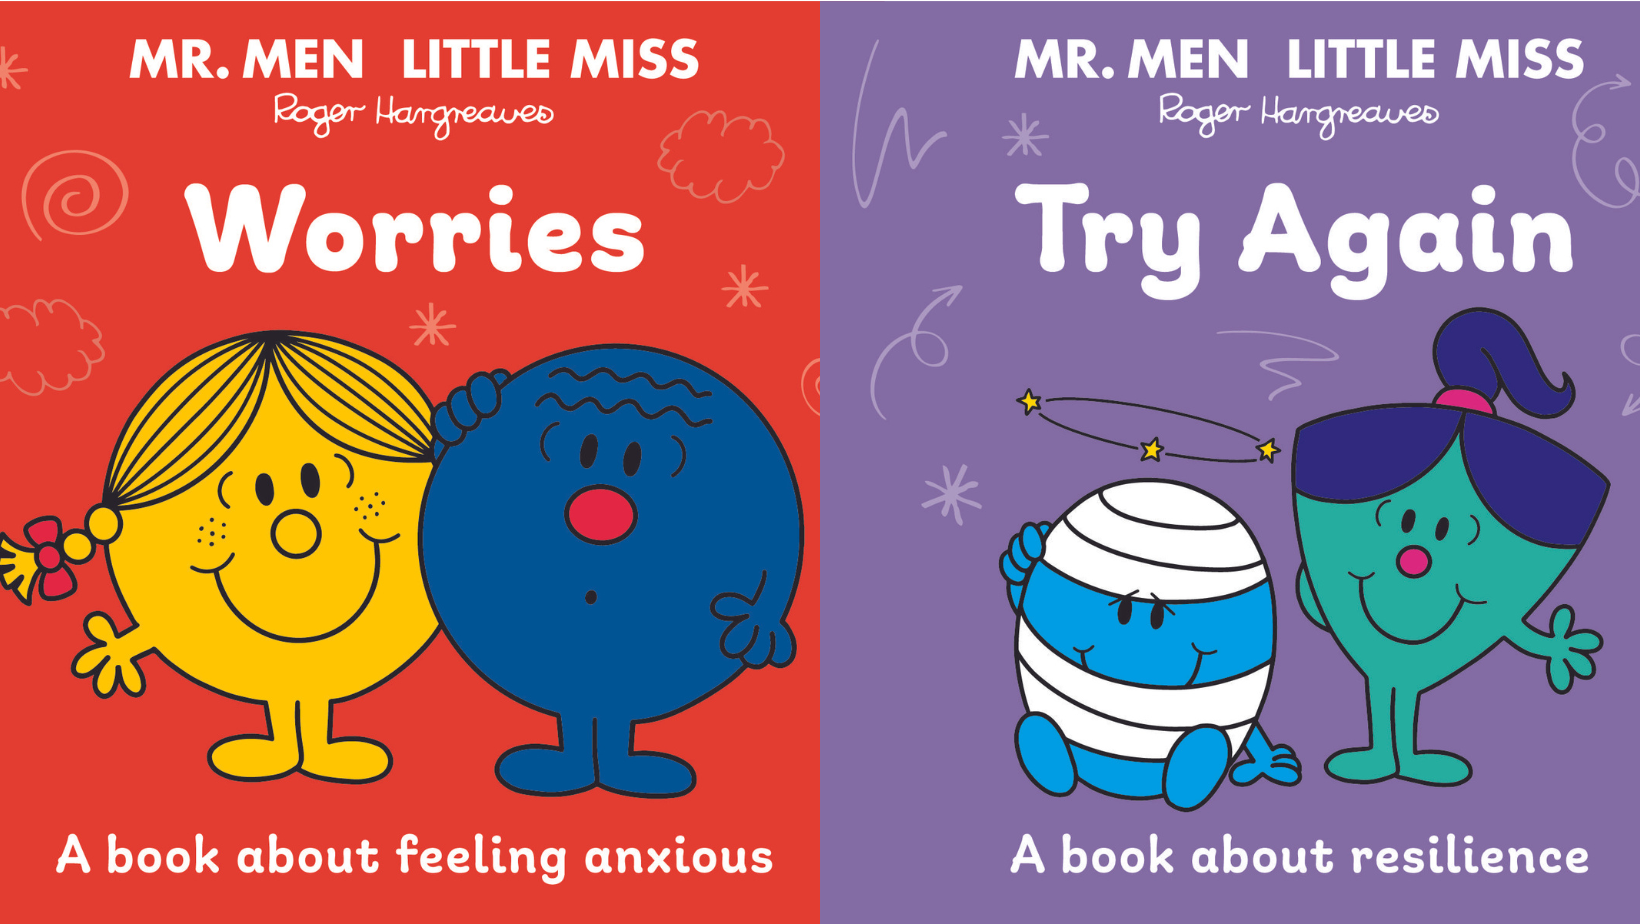 Mr. Men Little Miss launch book series exploring kid’s emotional wellbeing